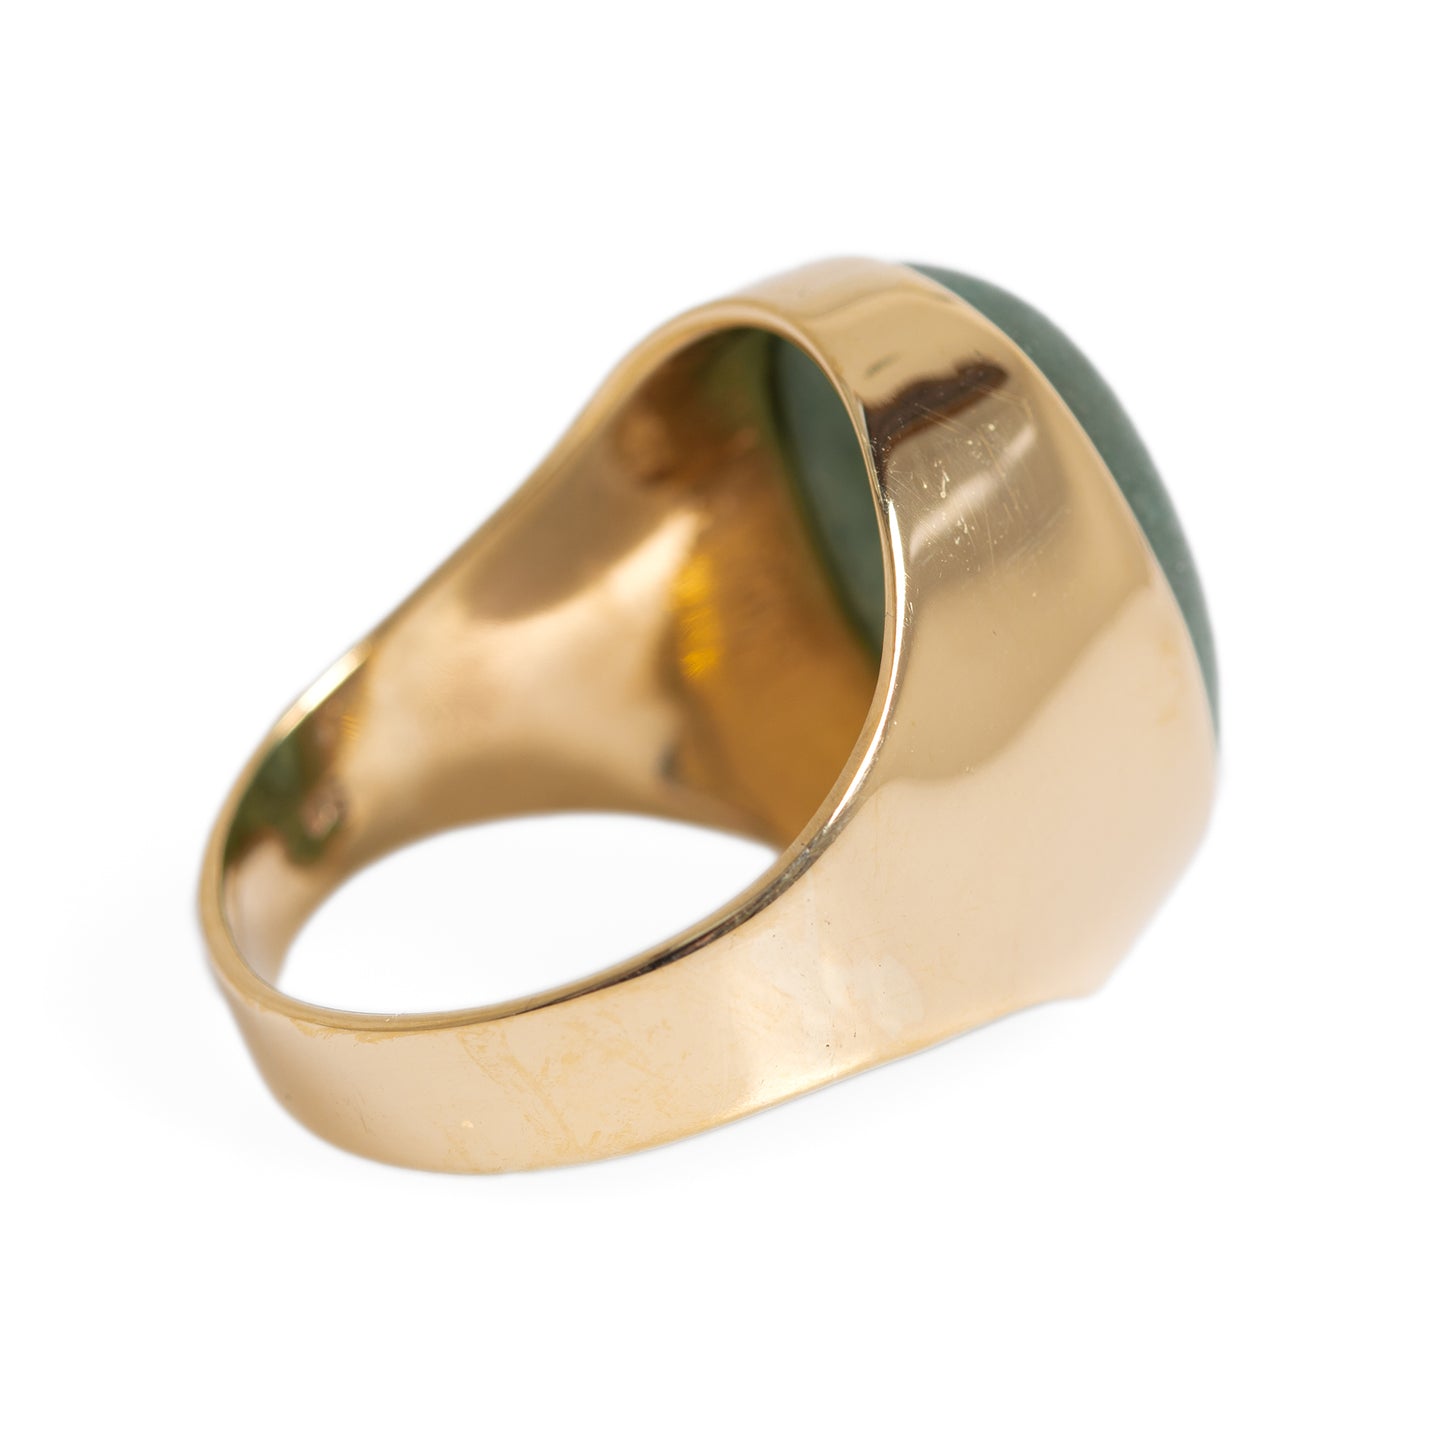 Vintage Large 9ct Gold & Green Jade (Jadeite) Cabochon Signet/Dress Ring c.1970 (A1287)